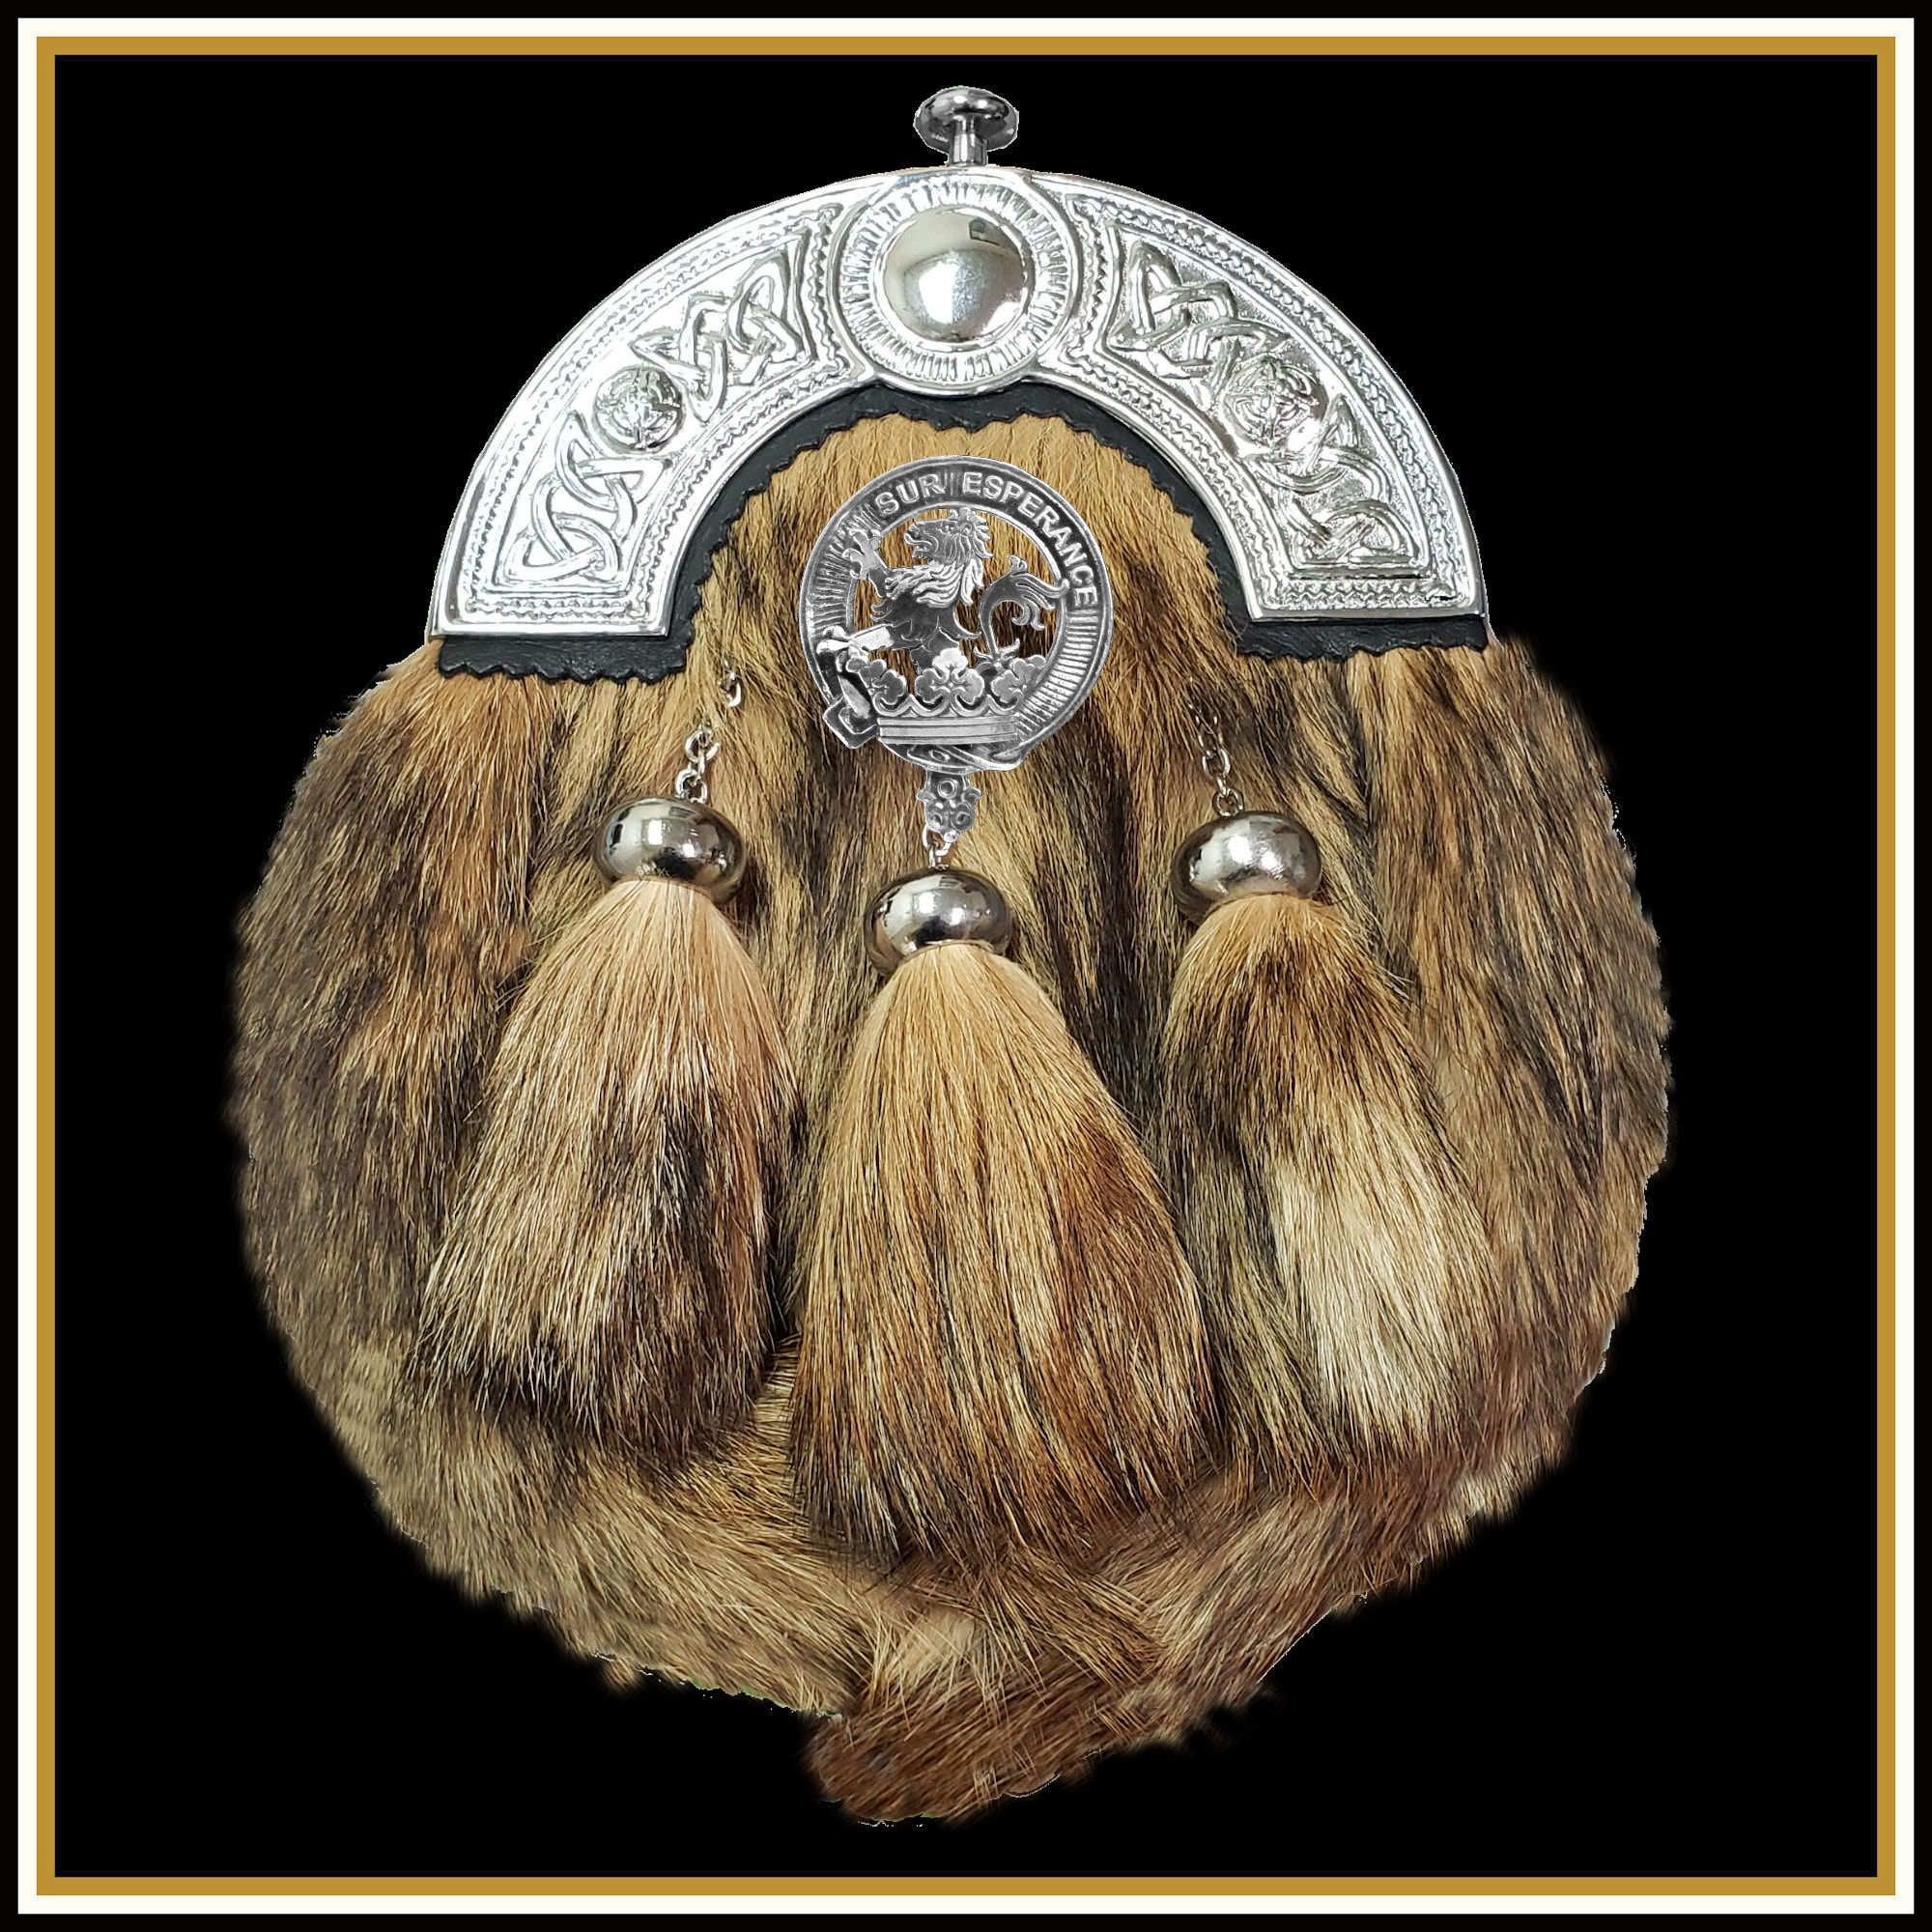 Moncreiffe Scottish Clan Crest Badge Dress Fur Sporran